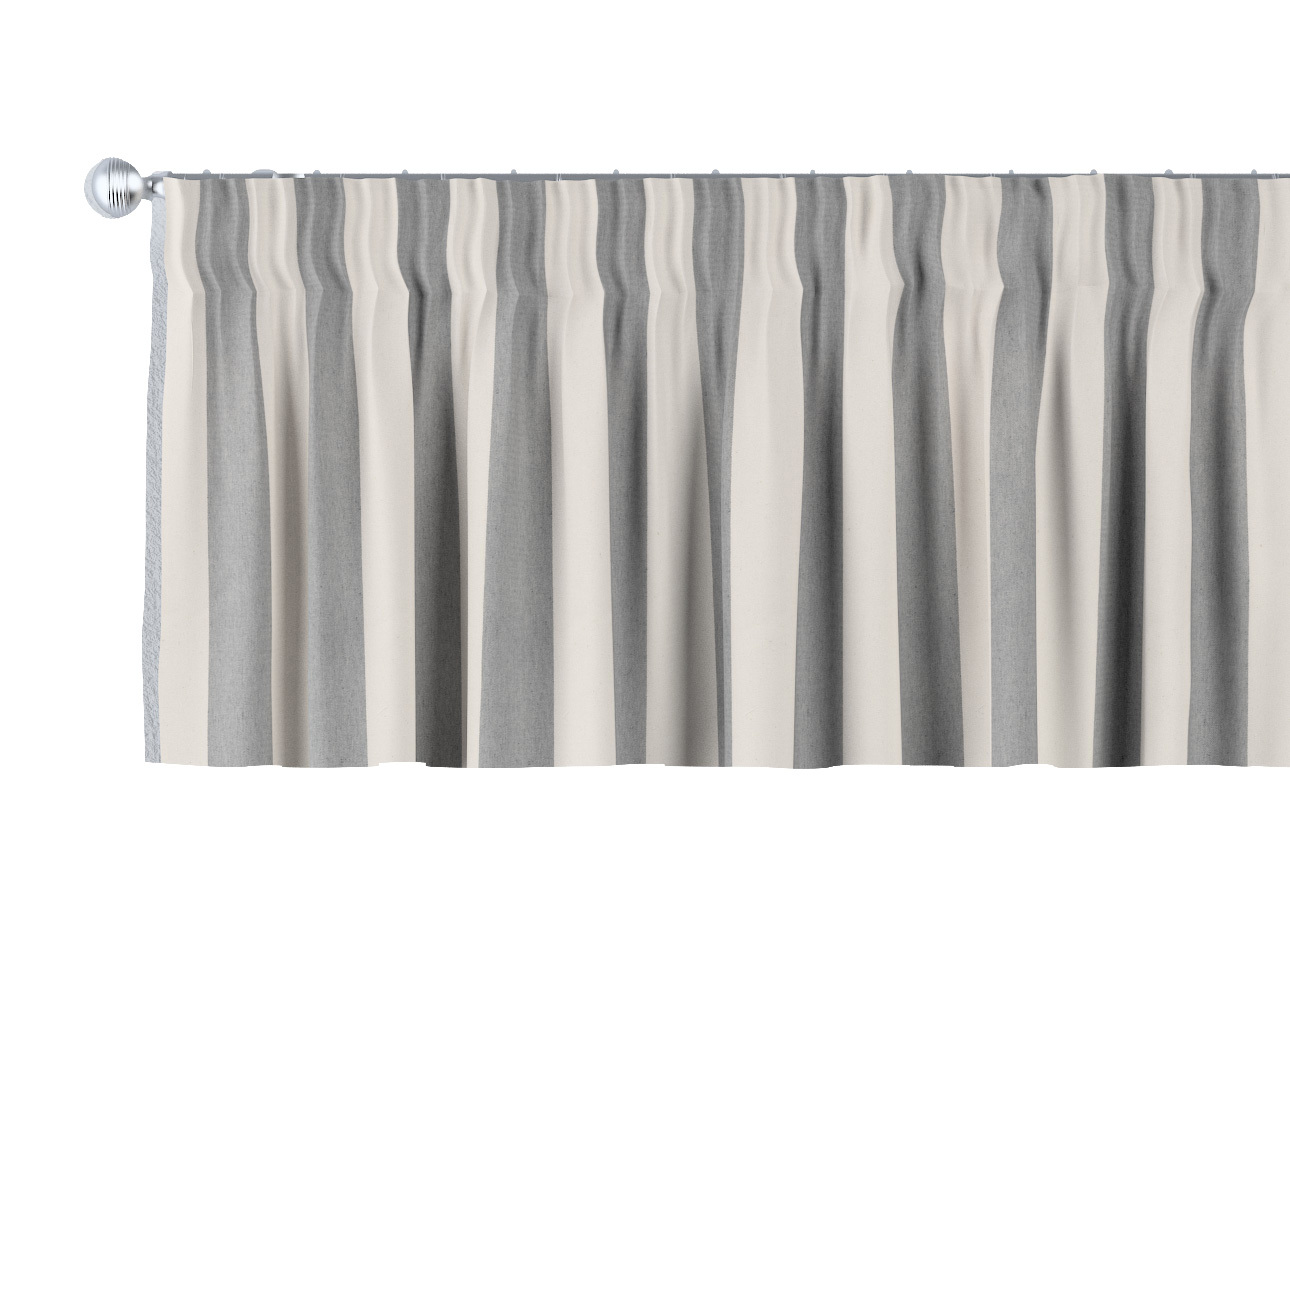 Kurzgardine mit Kräuselband, weiß-grau, 260 x 40 cm, Quadro (143-91) günstig online kaufen